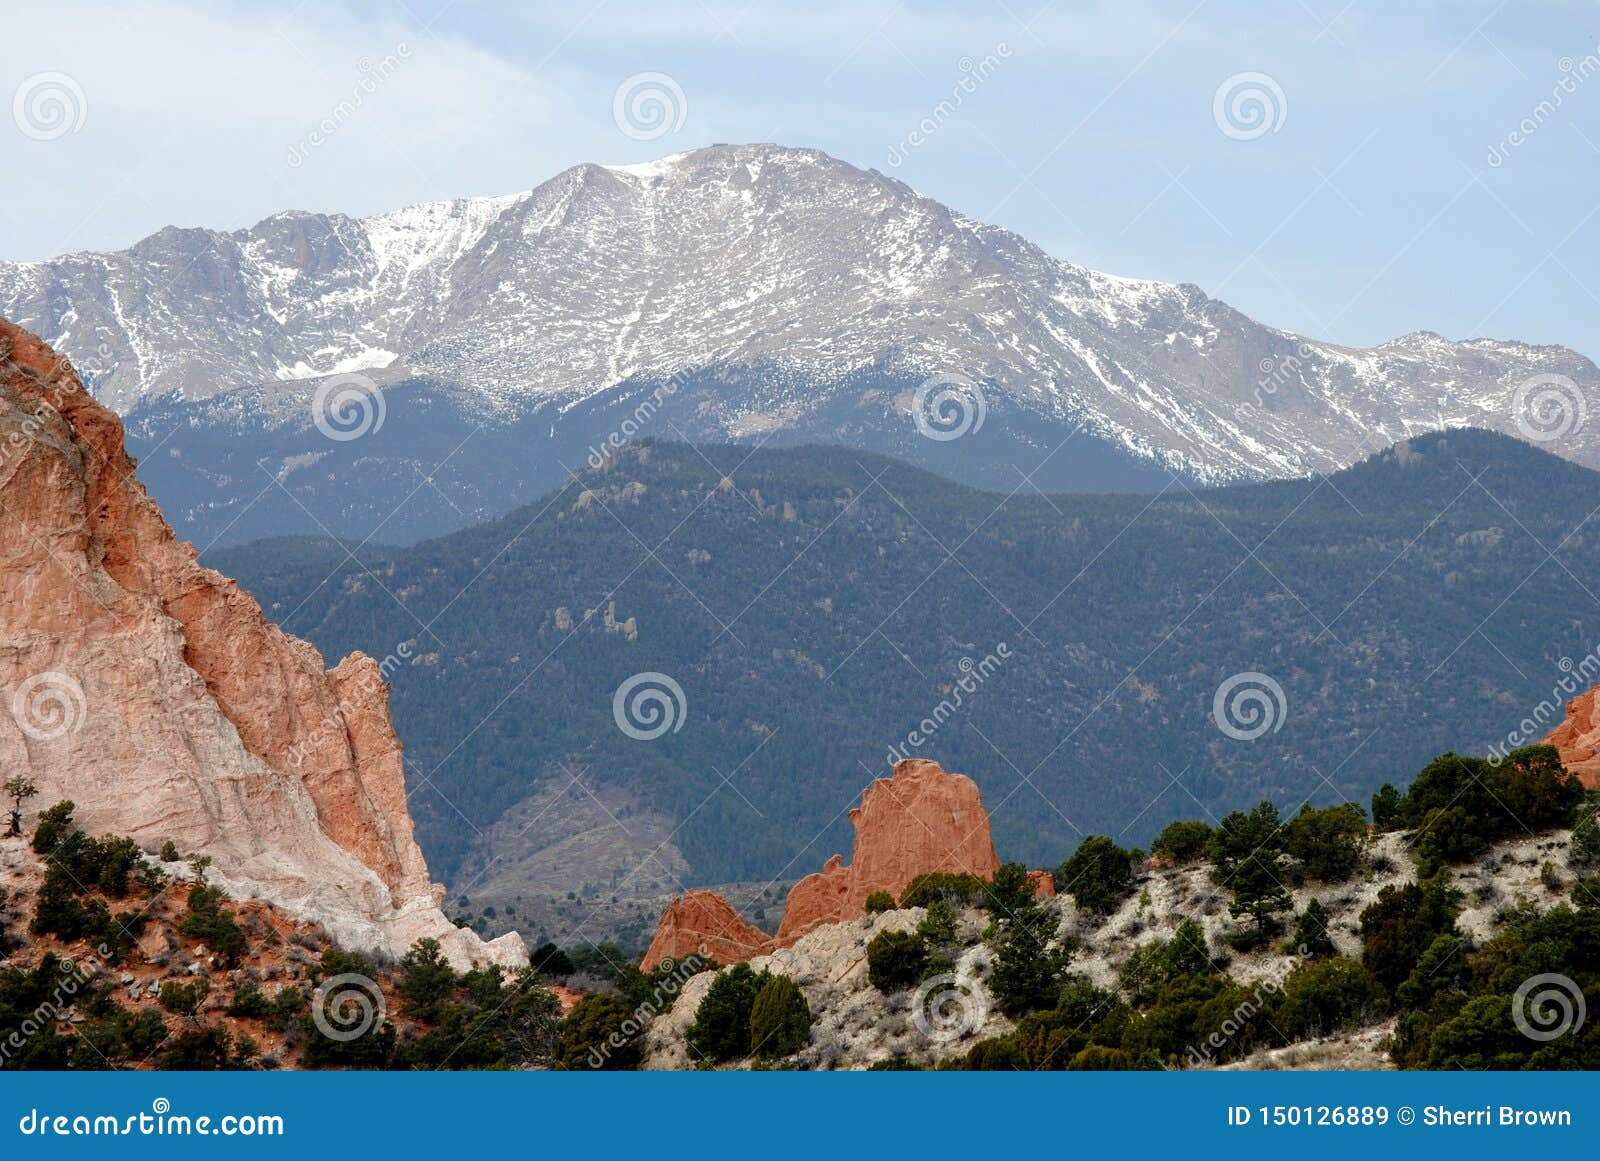 Denver Colorado Mountains Pikes Peak Stock Image Image Of Gods